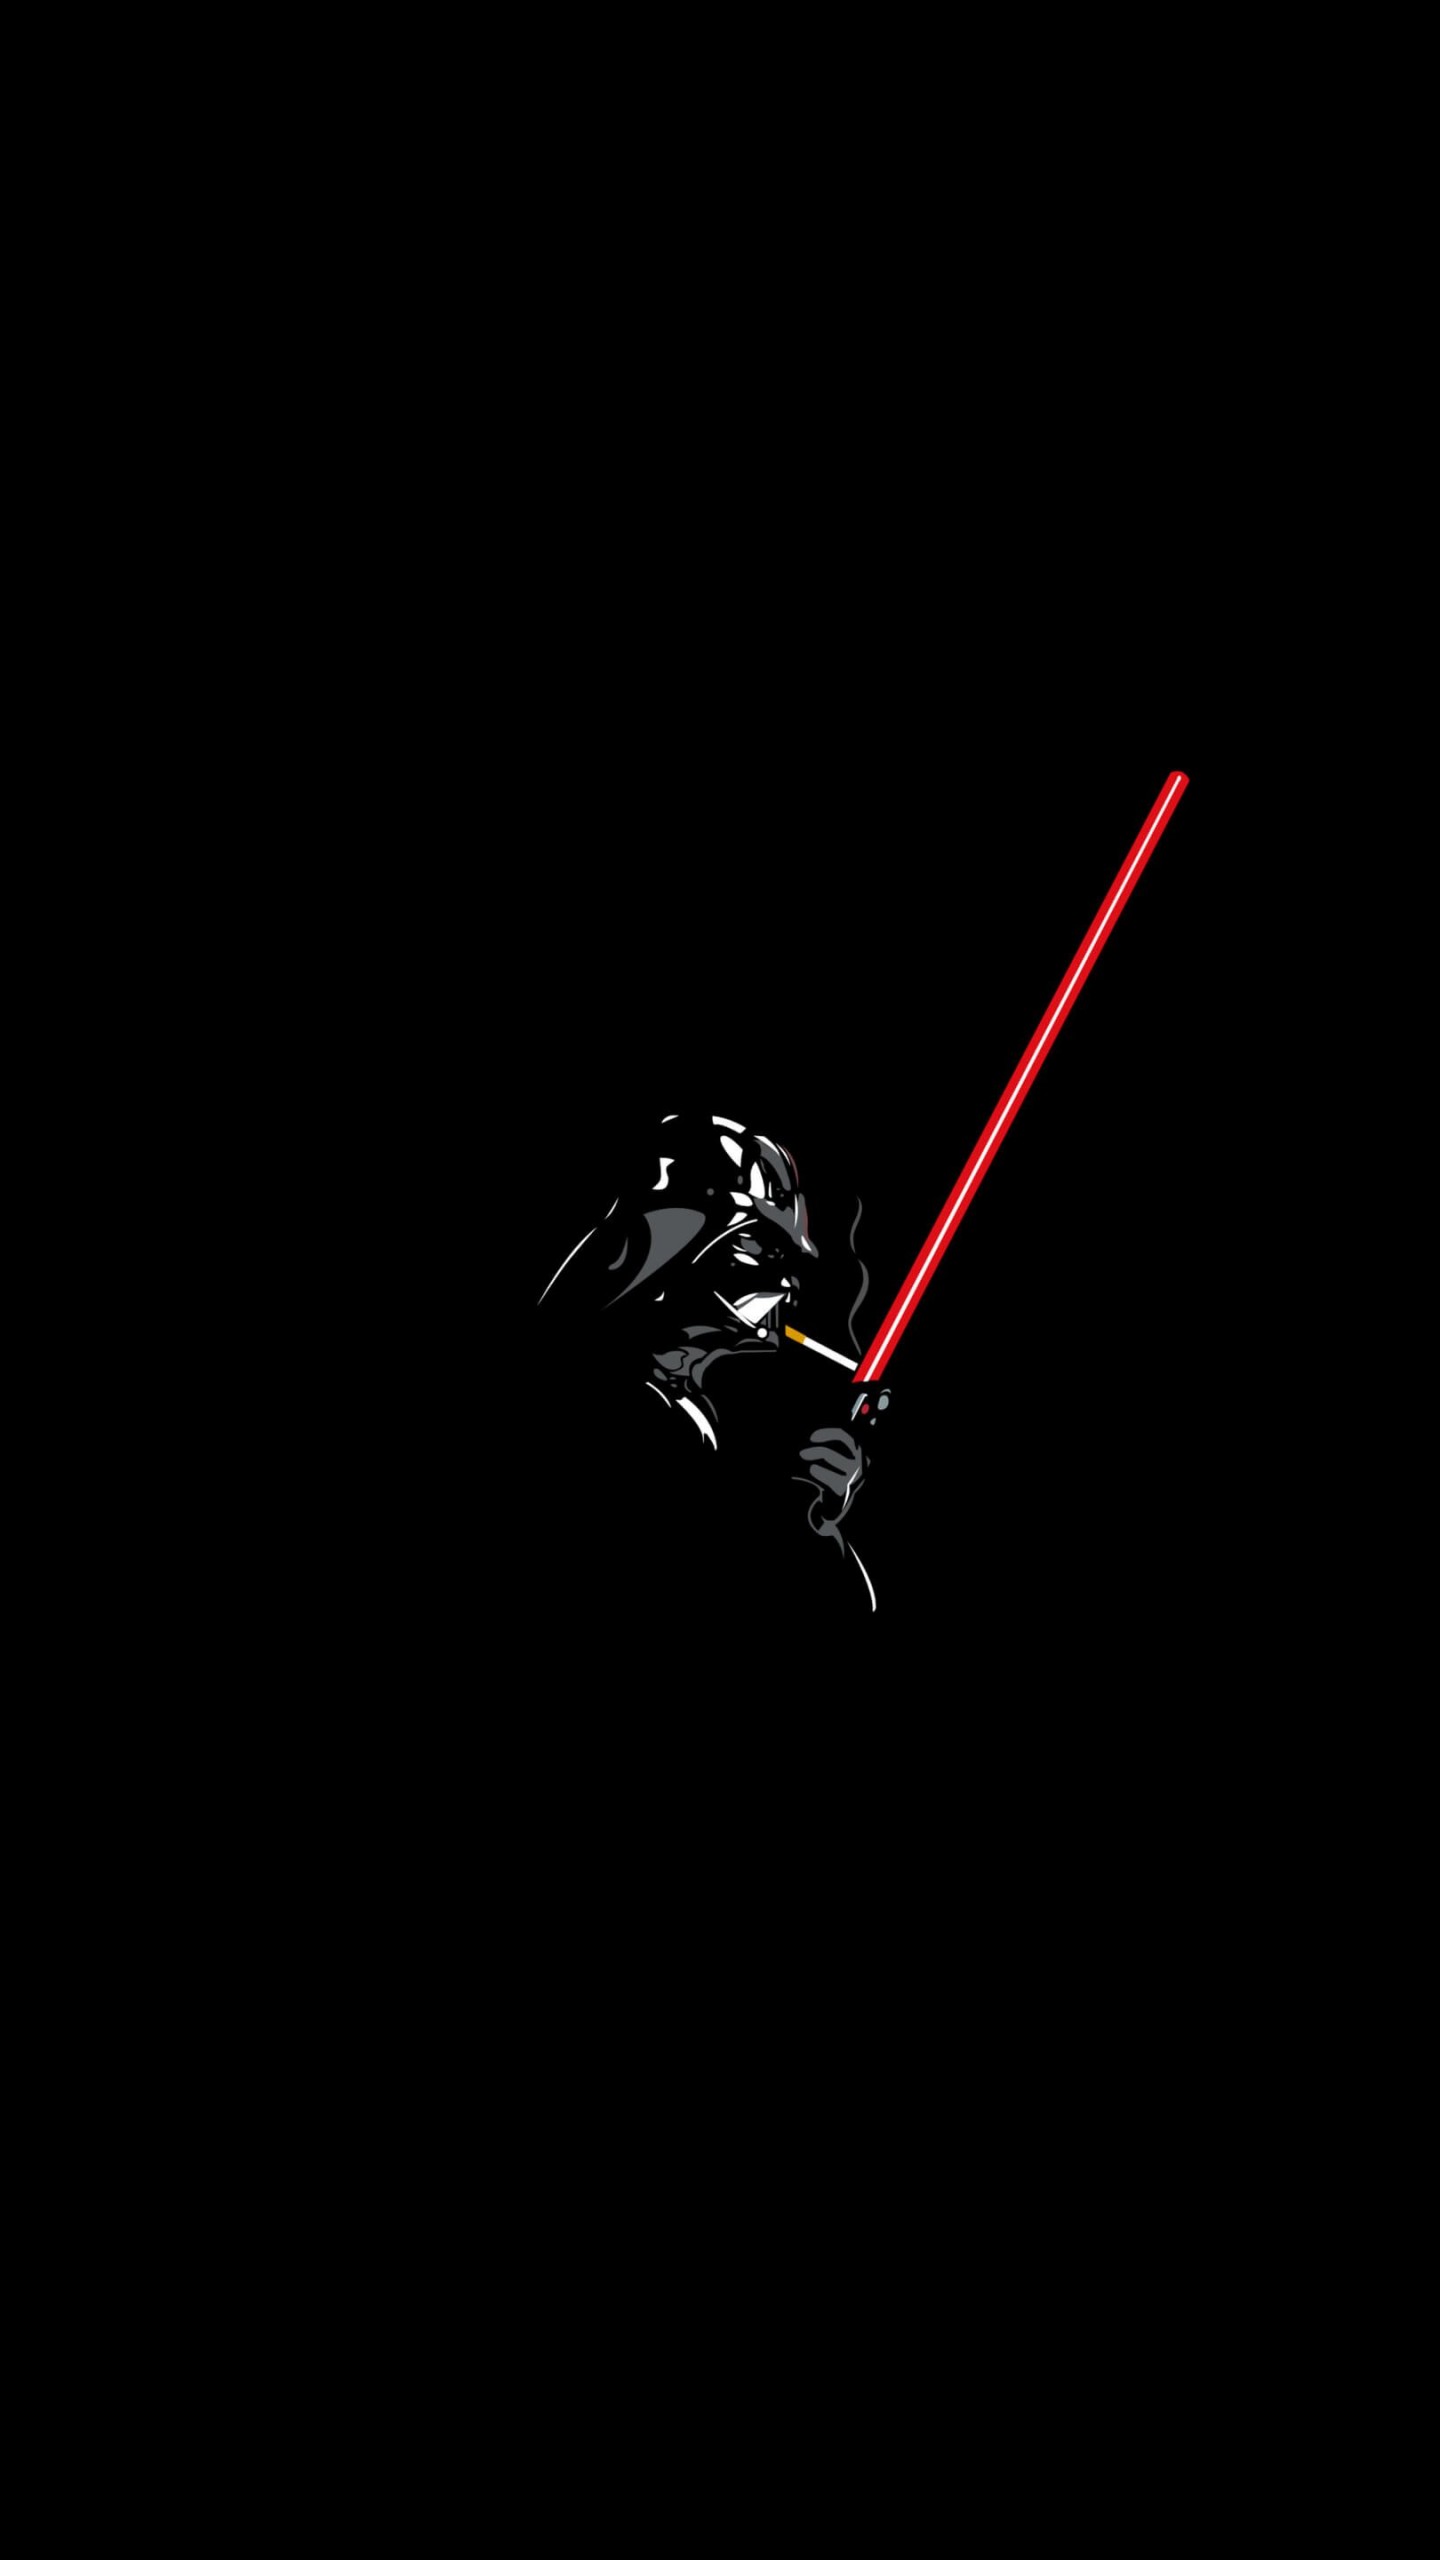 Darth Vader Lighting a Cigarette Wallpaper for Google Nexus 6P